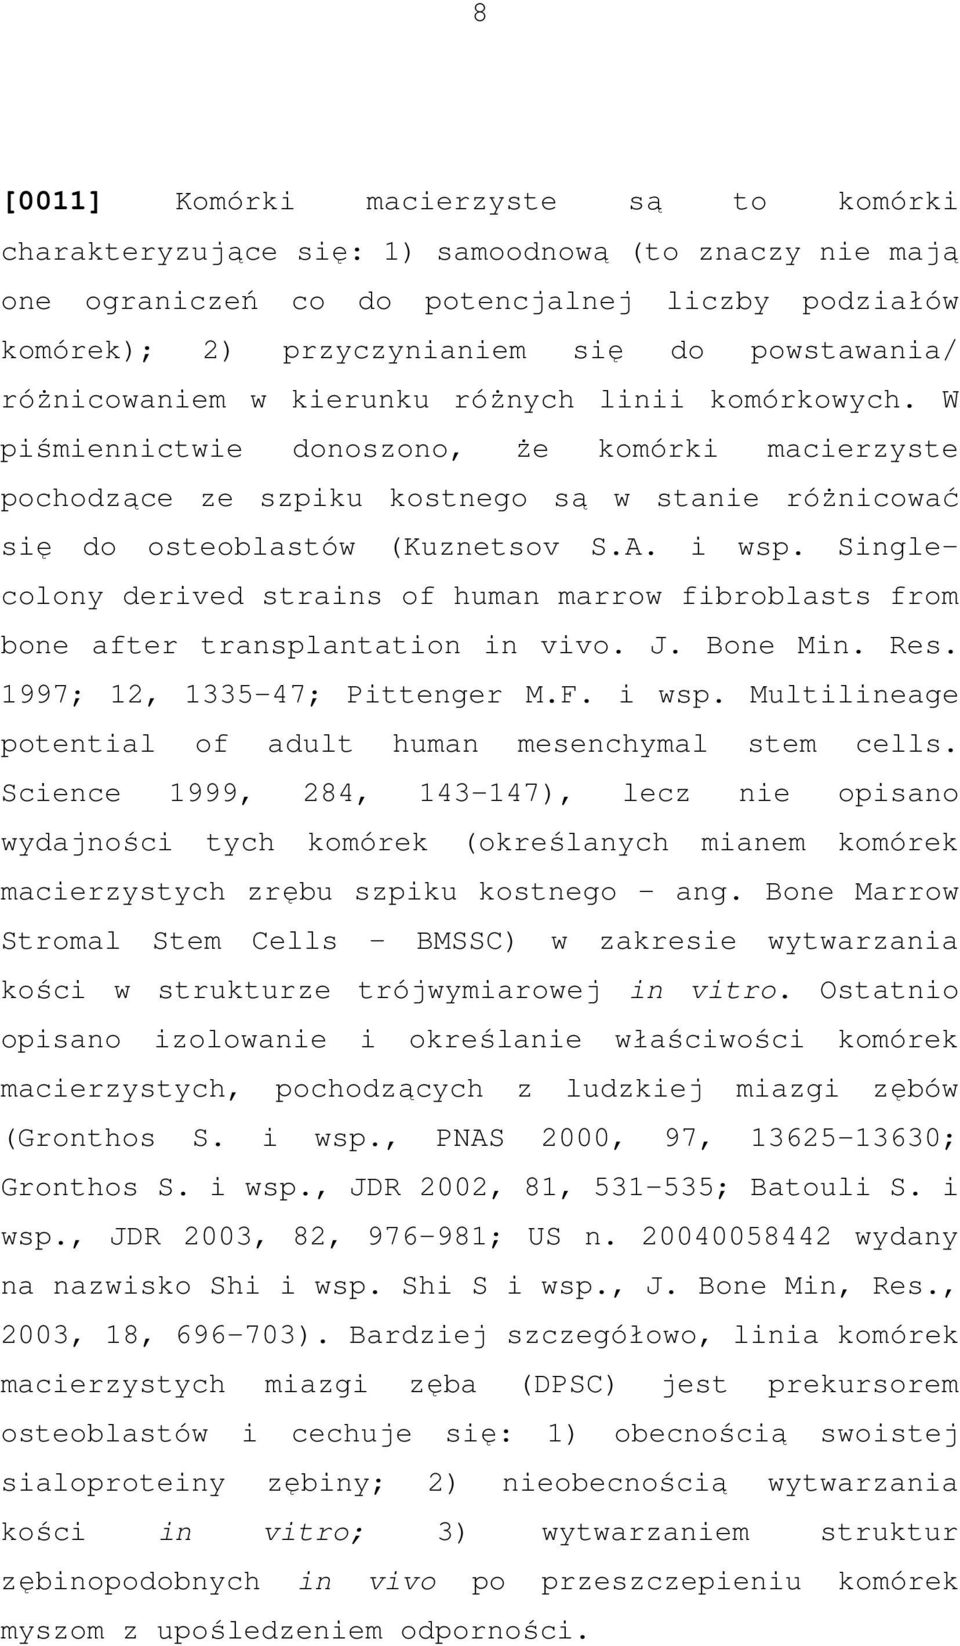 Singlecolony derived strains of human marrow fibroblasts from bone after transplantation in vivo. J. Bone Min. Res. 1997; 12, 1335-47; Pittenger M.F. i wsp.